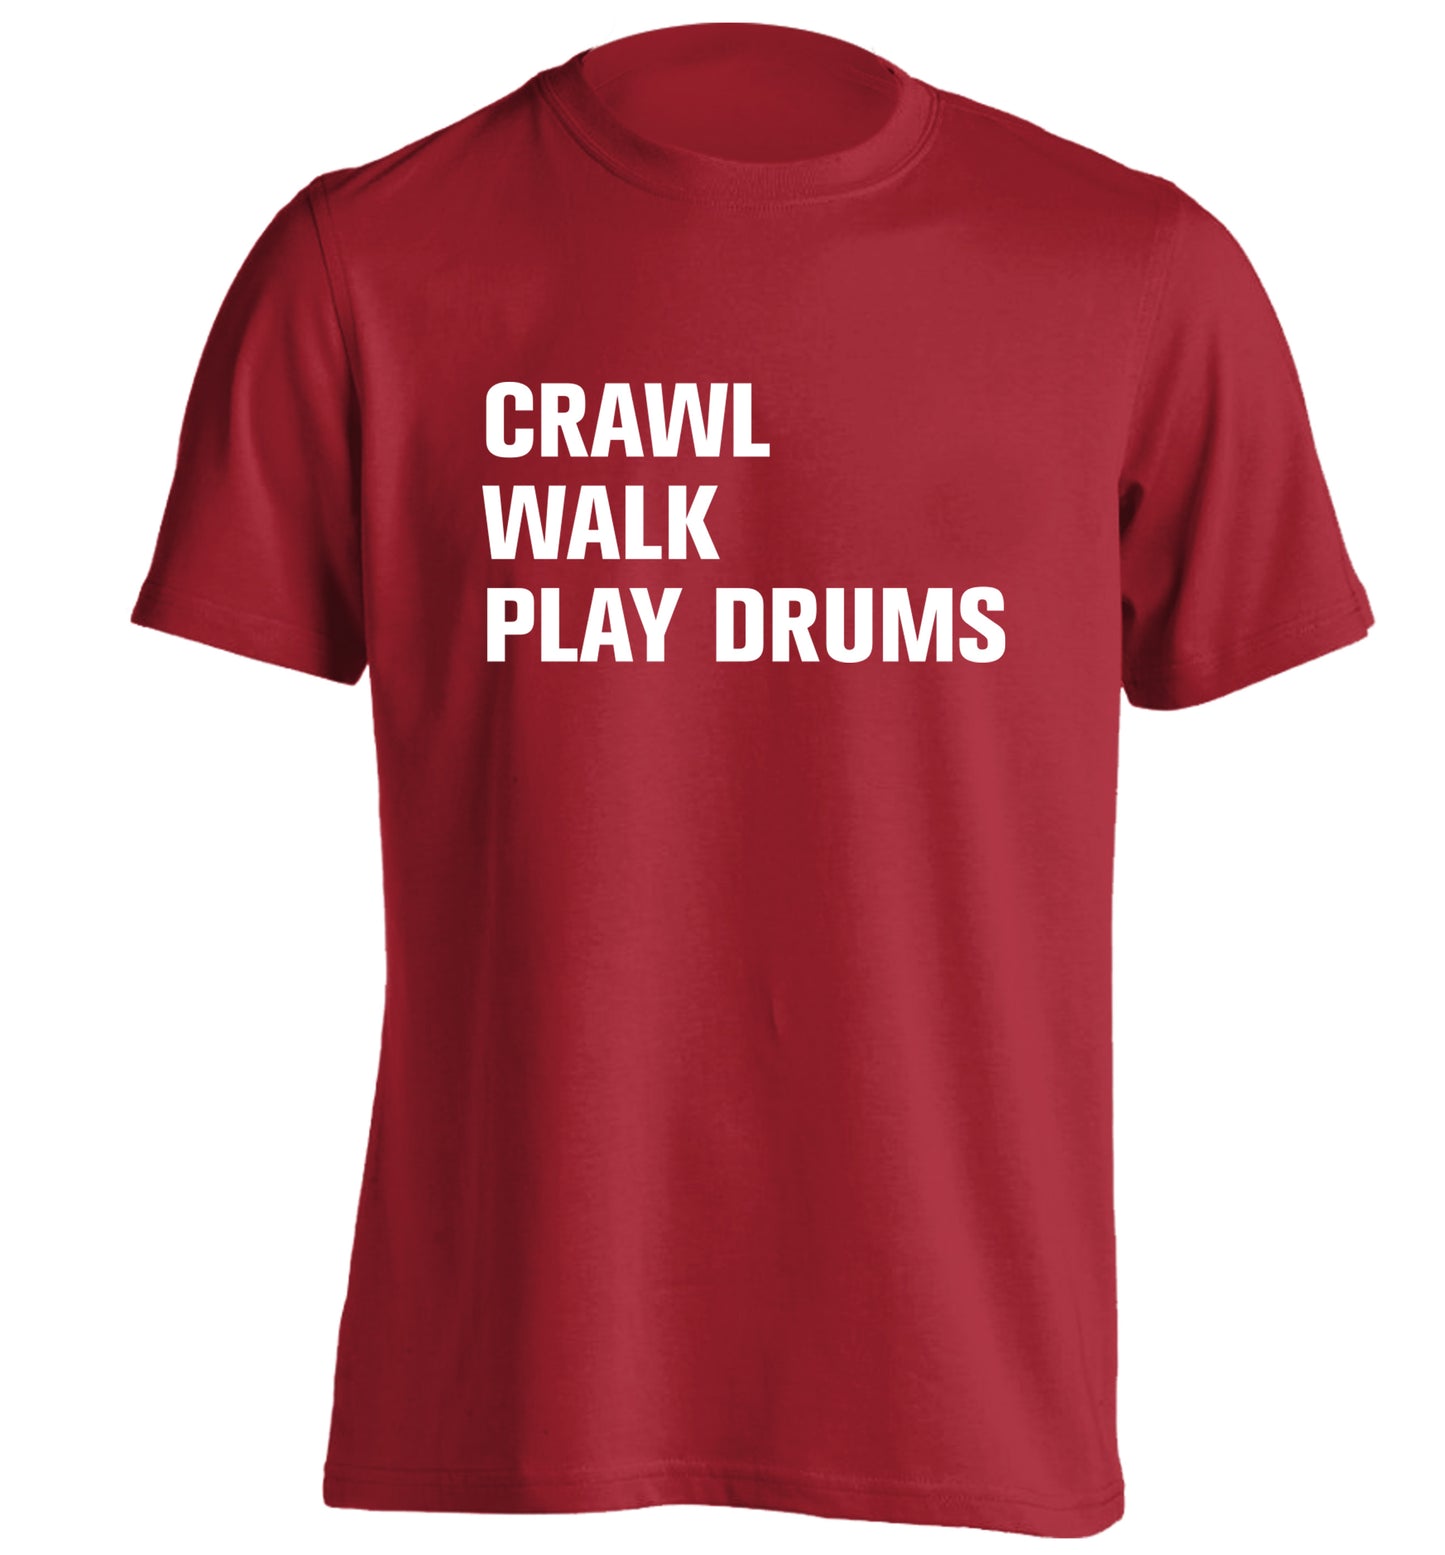 Crawl walk play drums adults unisex red Tshirt 2XL